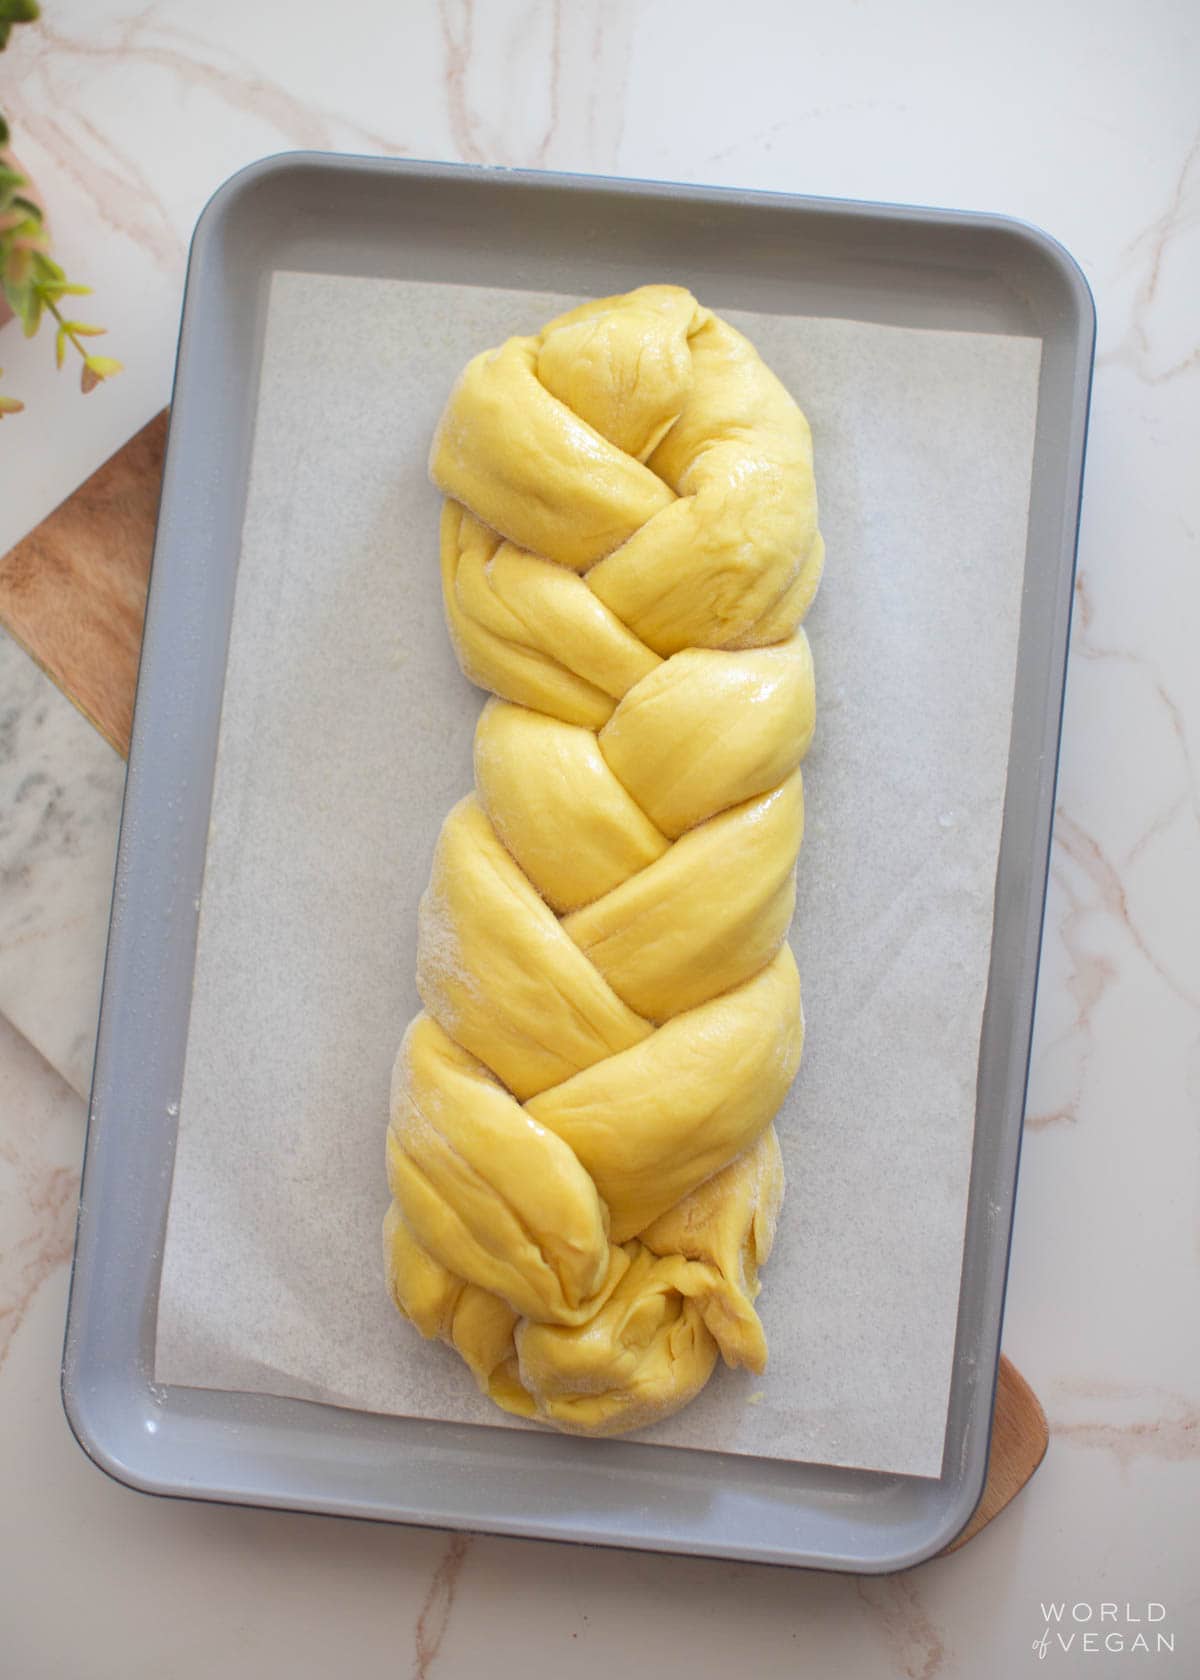 Three-strand braided vegan challah bread on a baking tray.